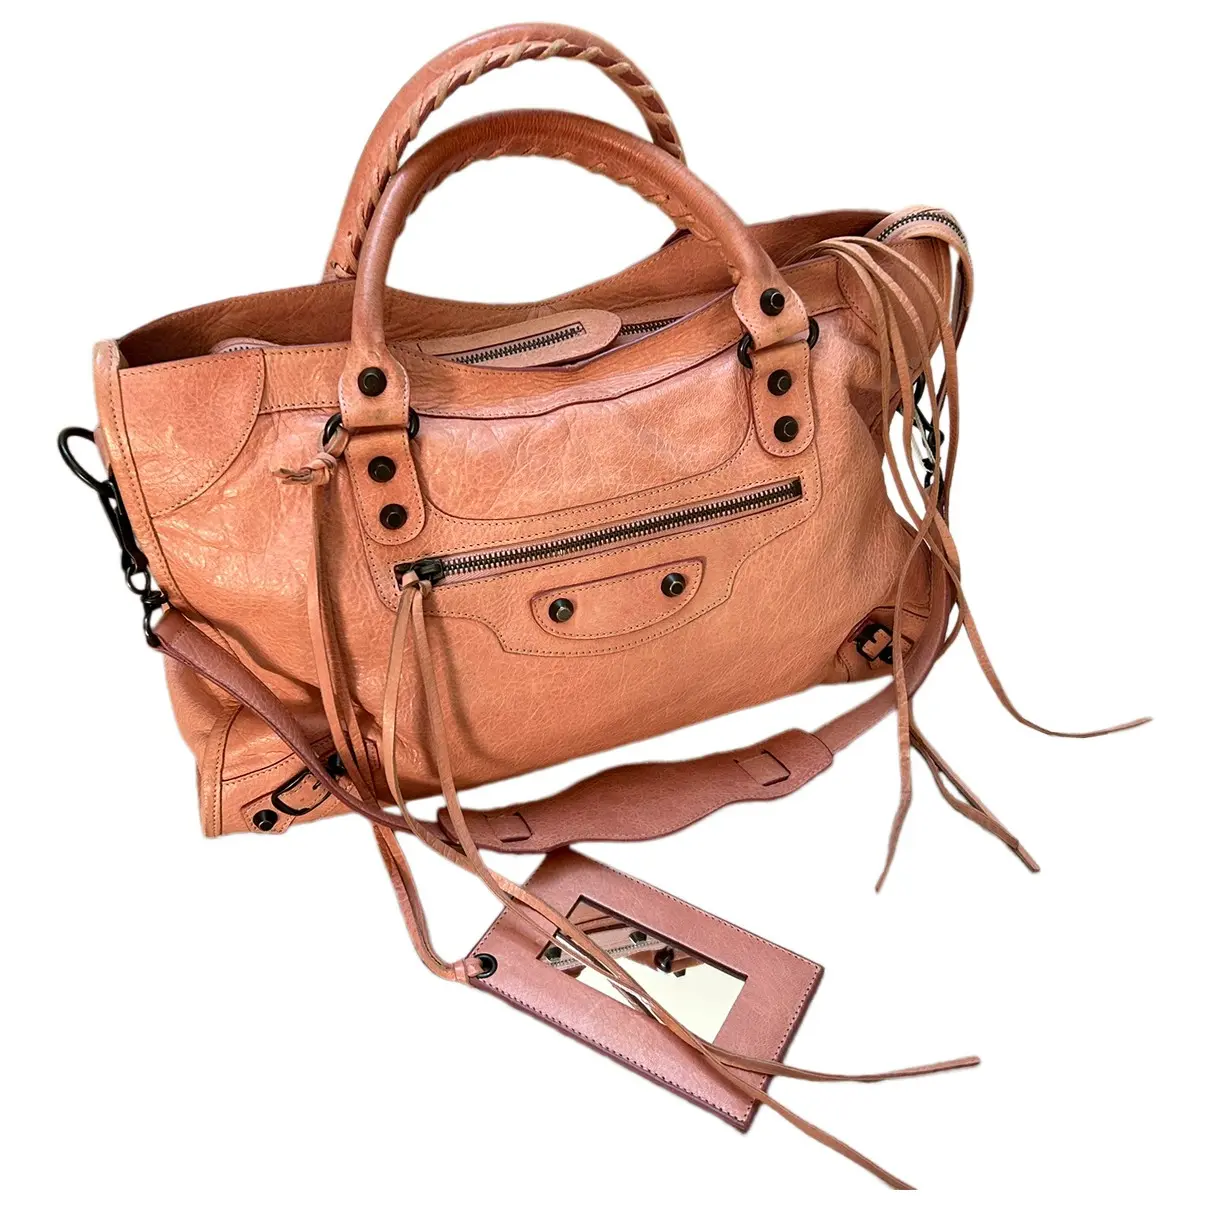 City leather handbag